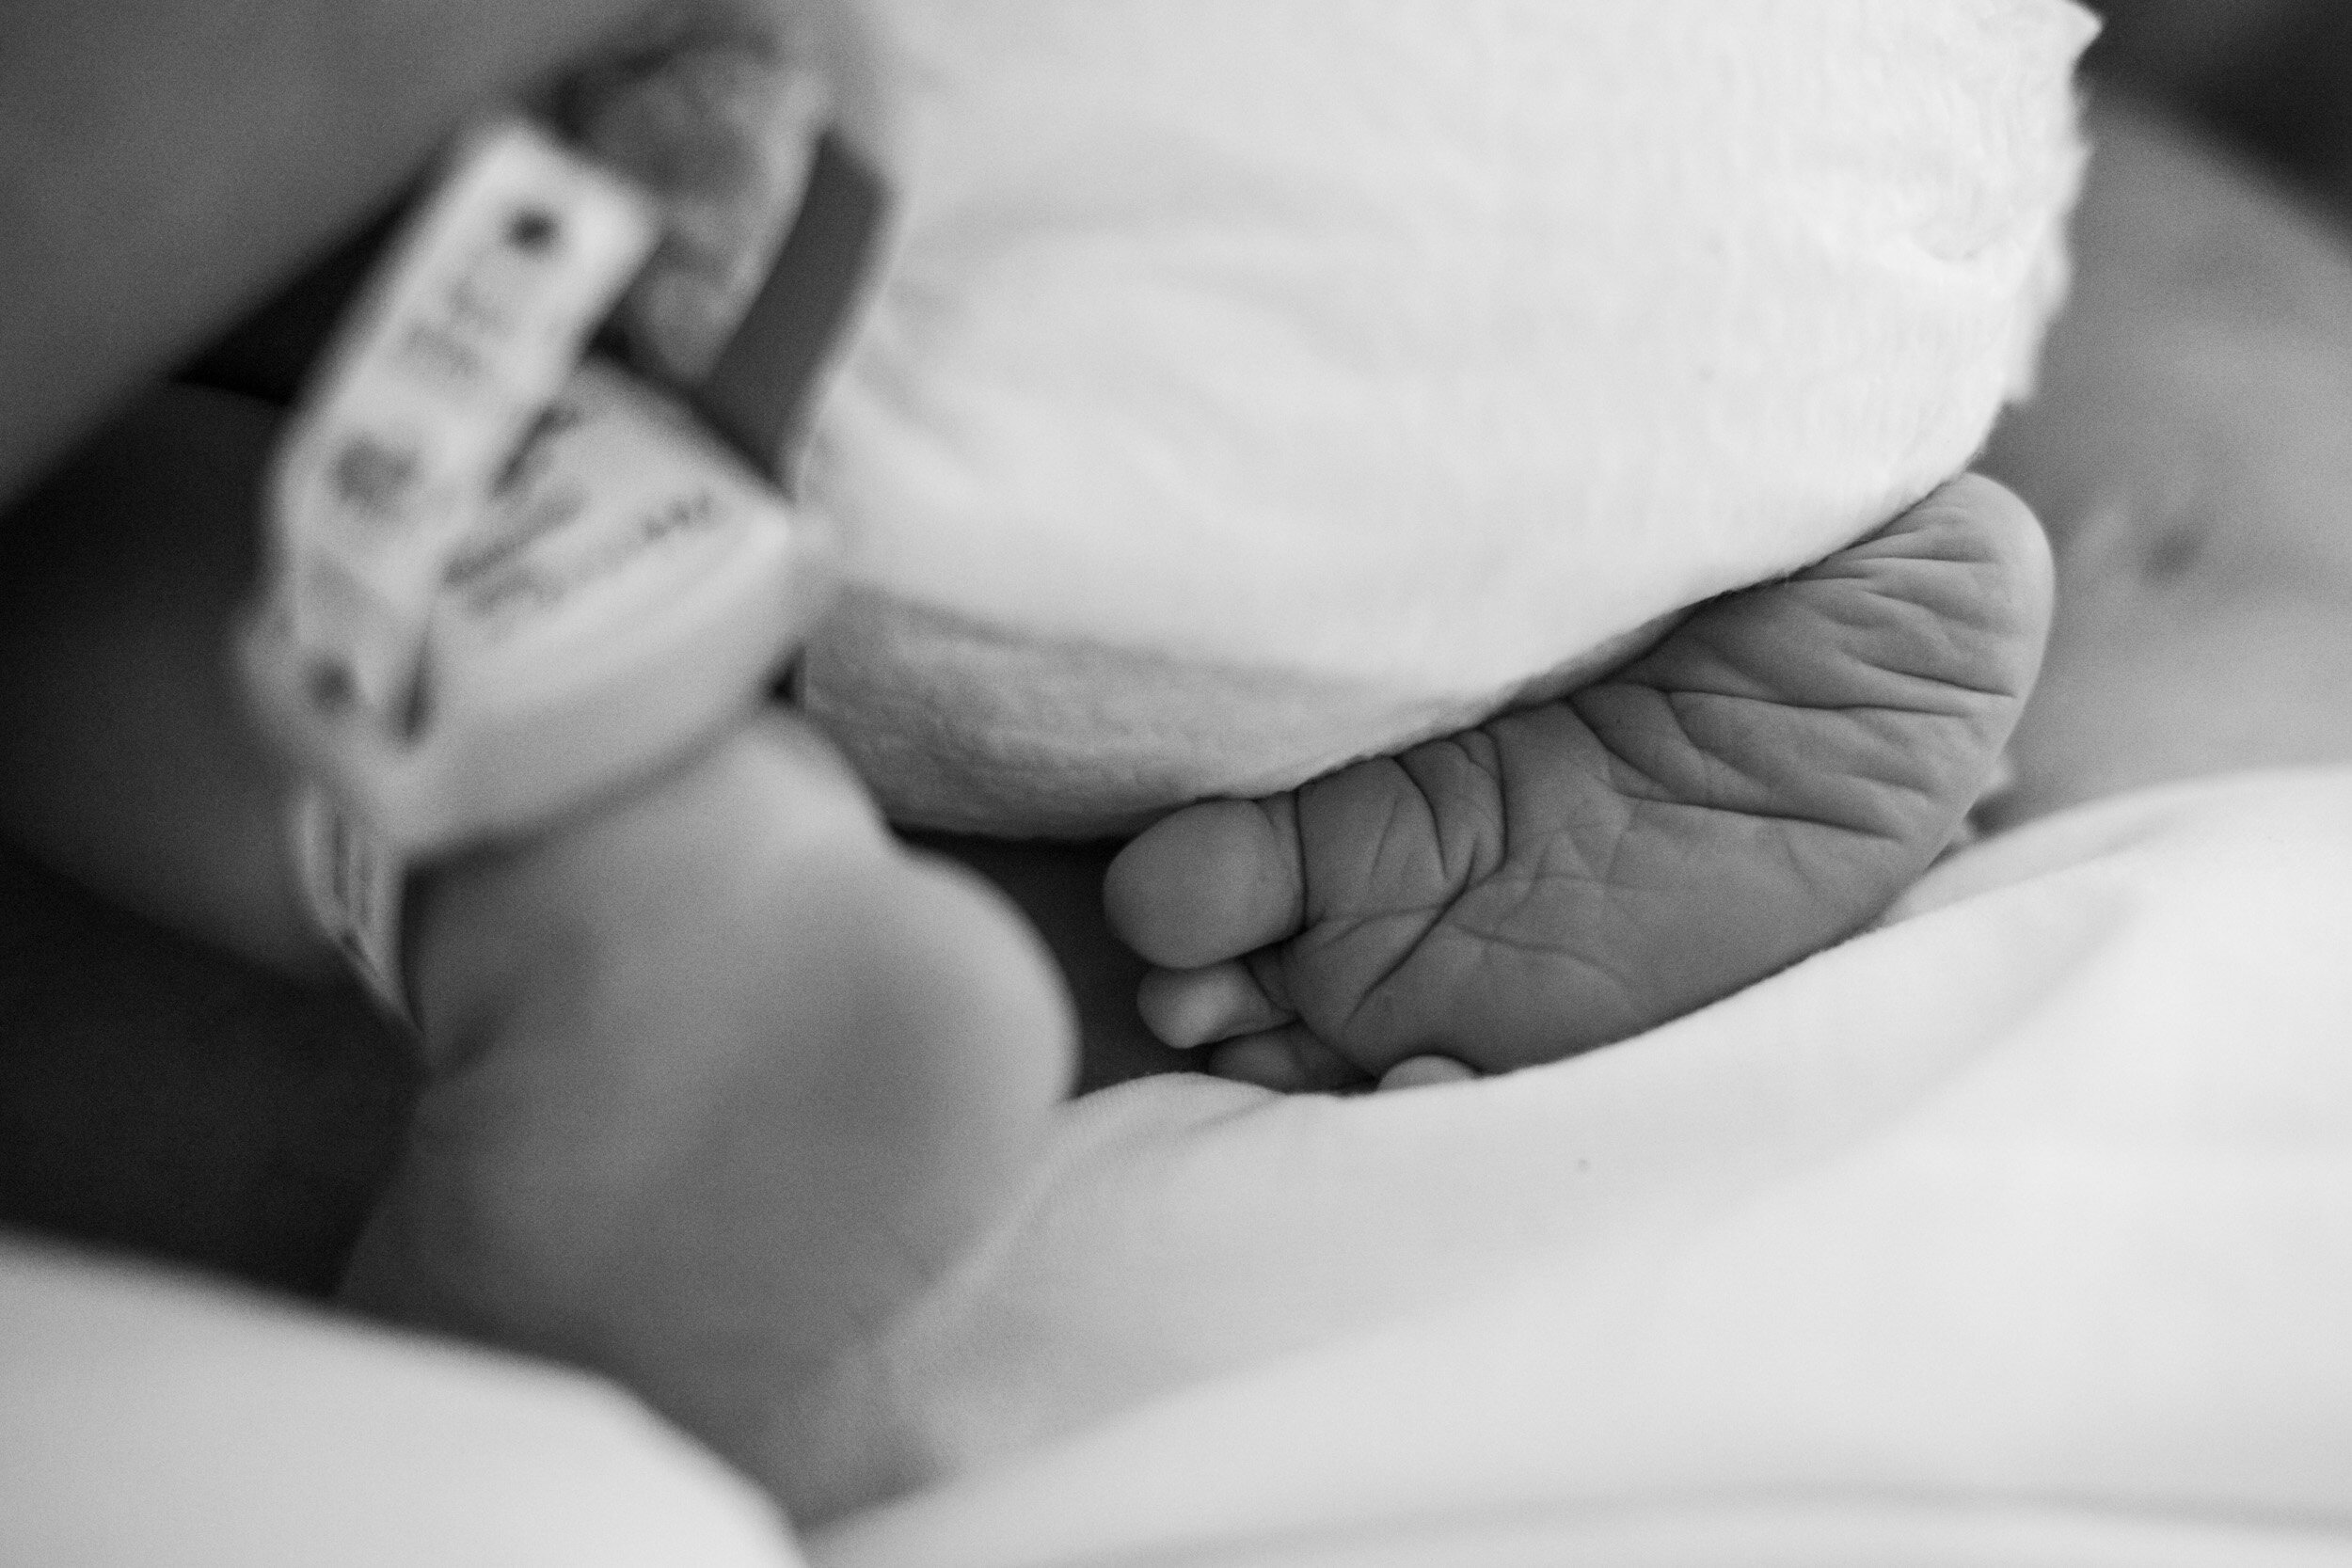 newborn baby feet on the bed